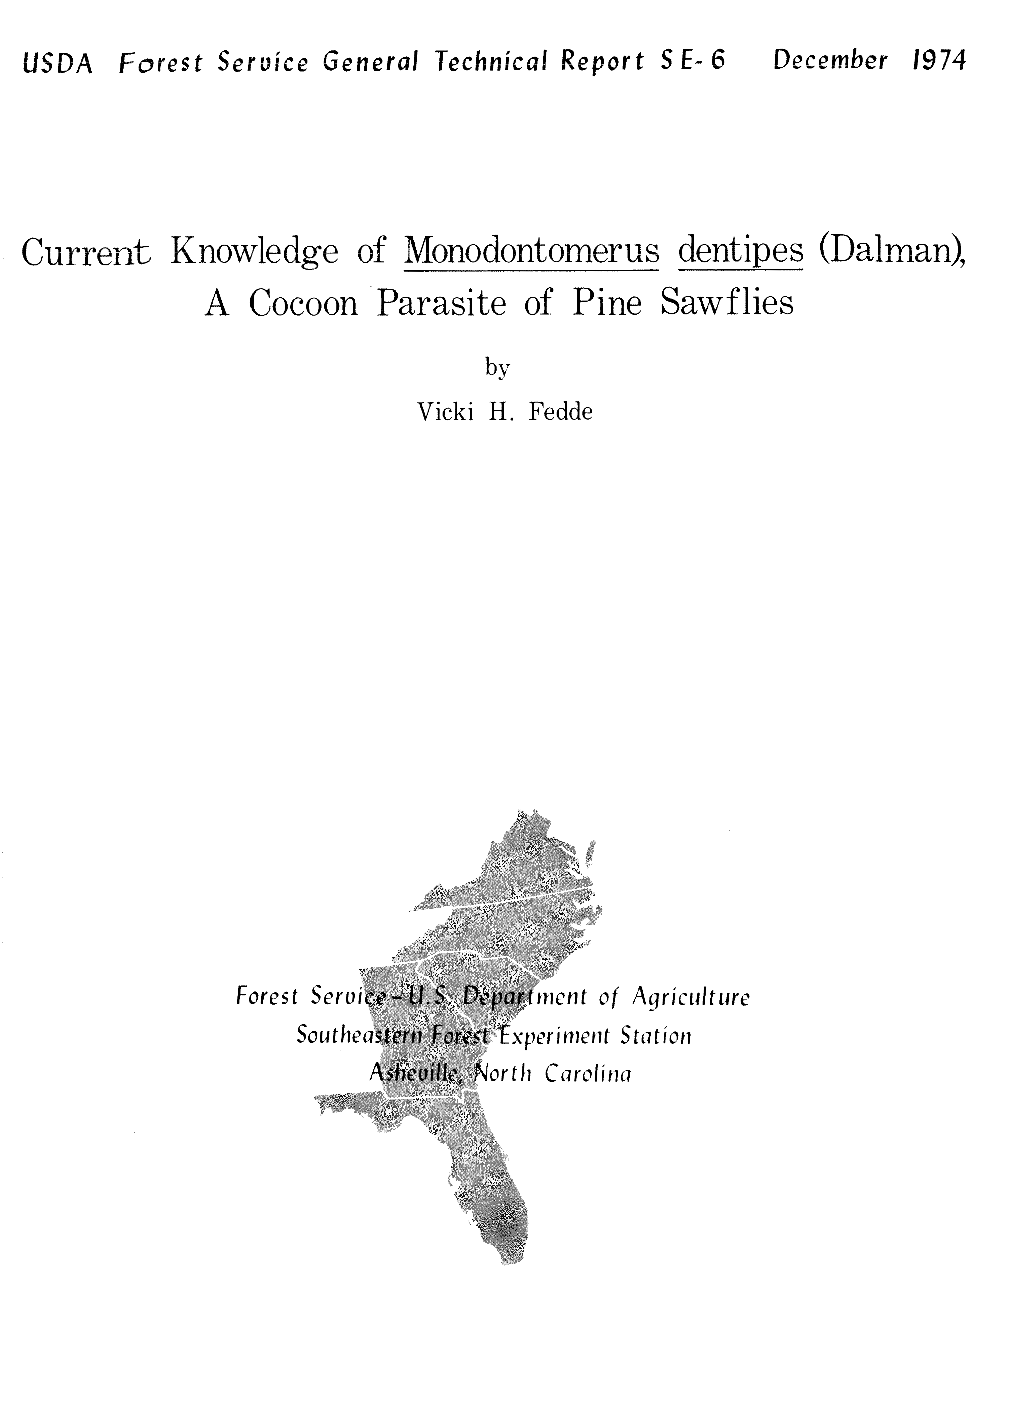 Current Knowledge of Monodontomerus Dentipes (Dalman), a Cocoon Parasite of Pine Sawflies